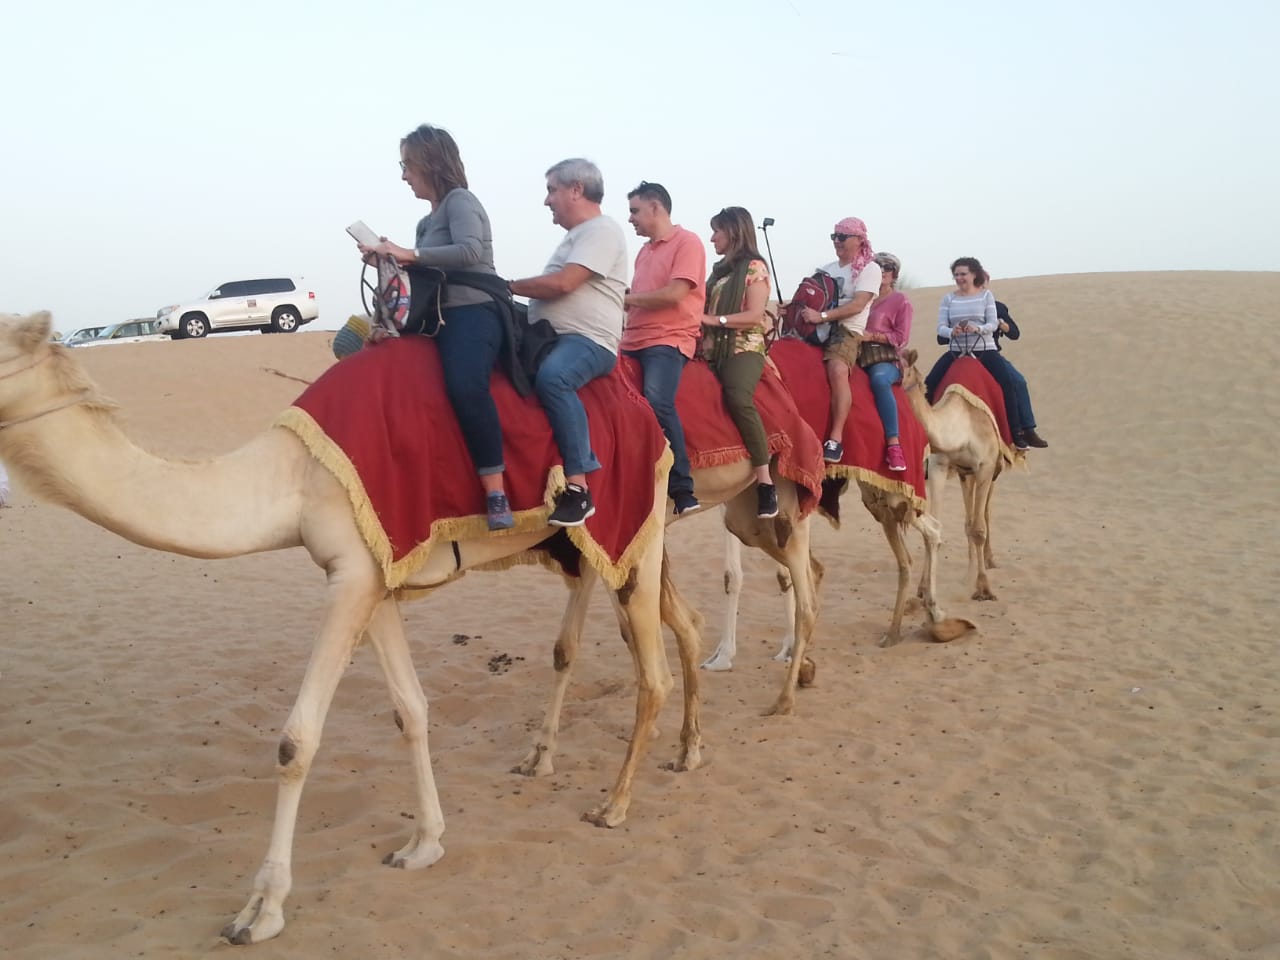 A safari with a camel